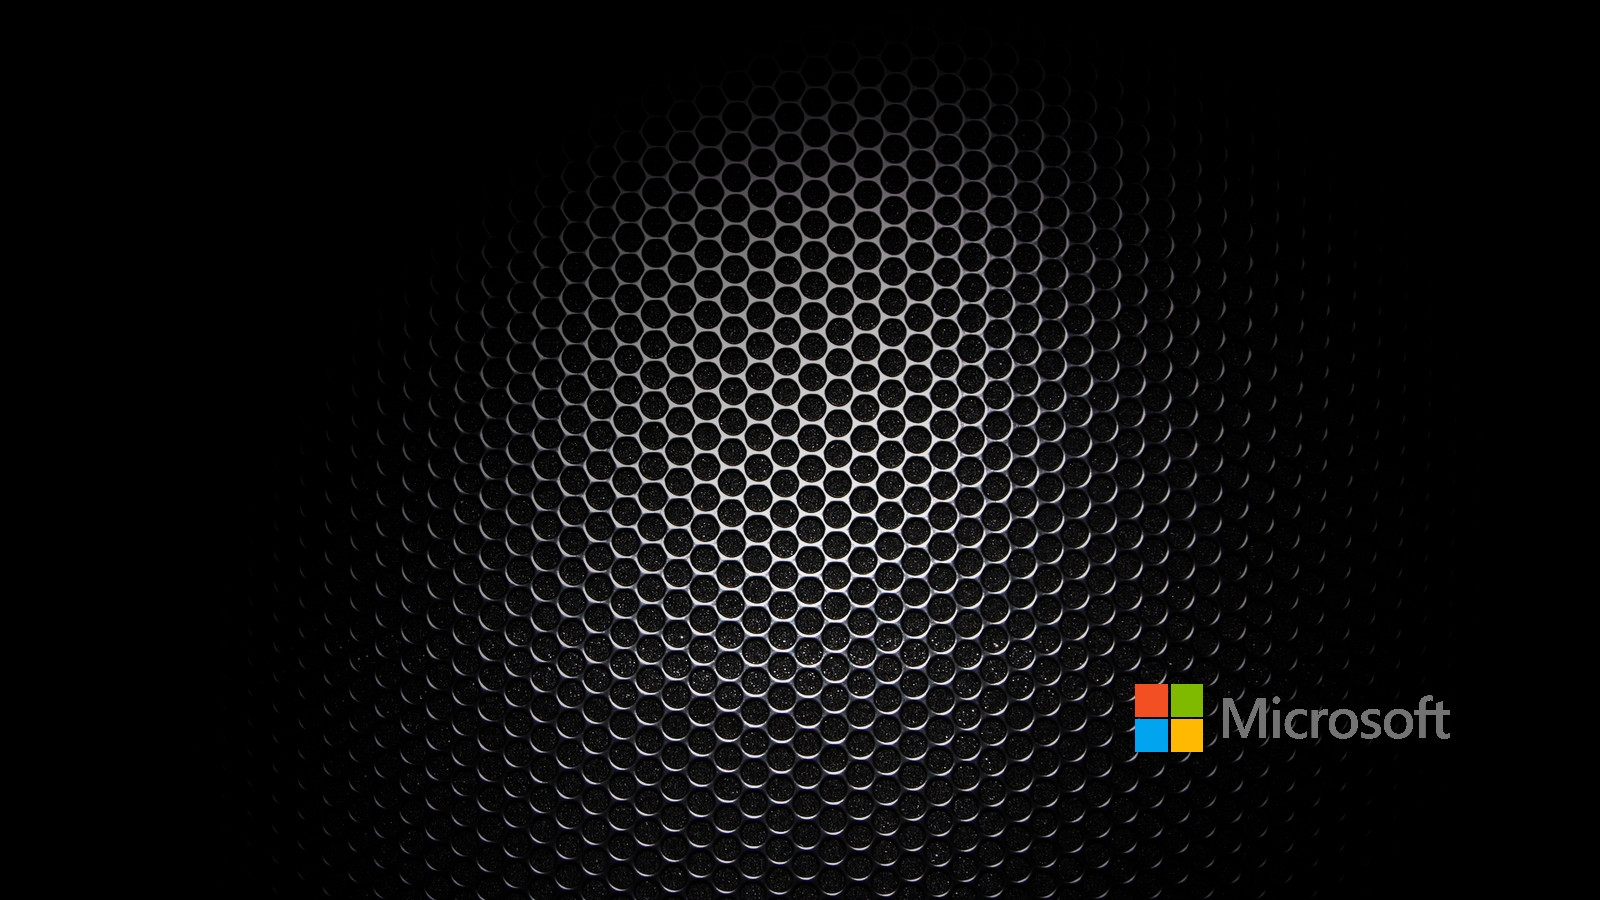 HD Wallpaper Background Id Px Microsoft